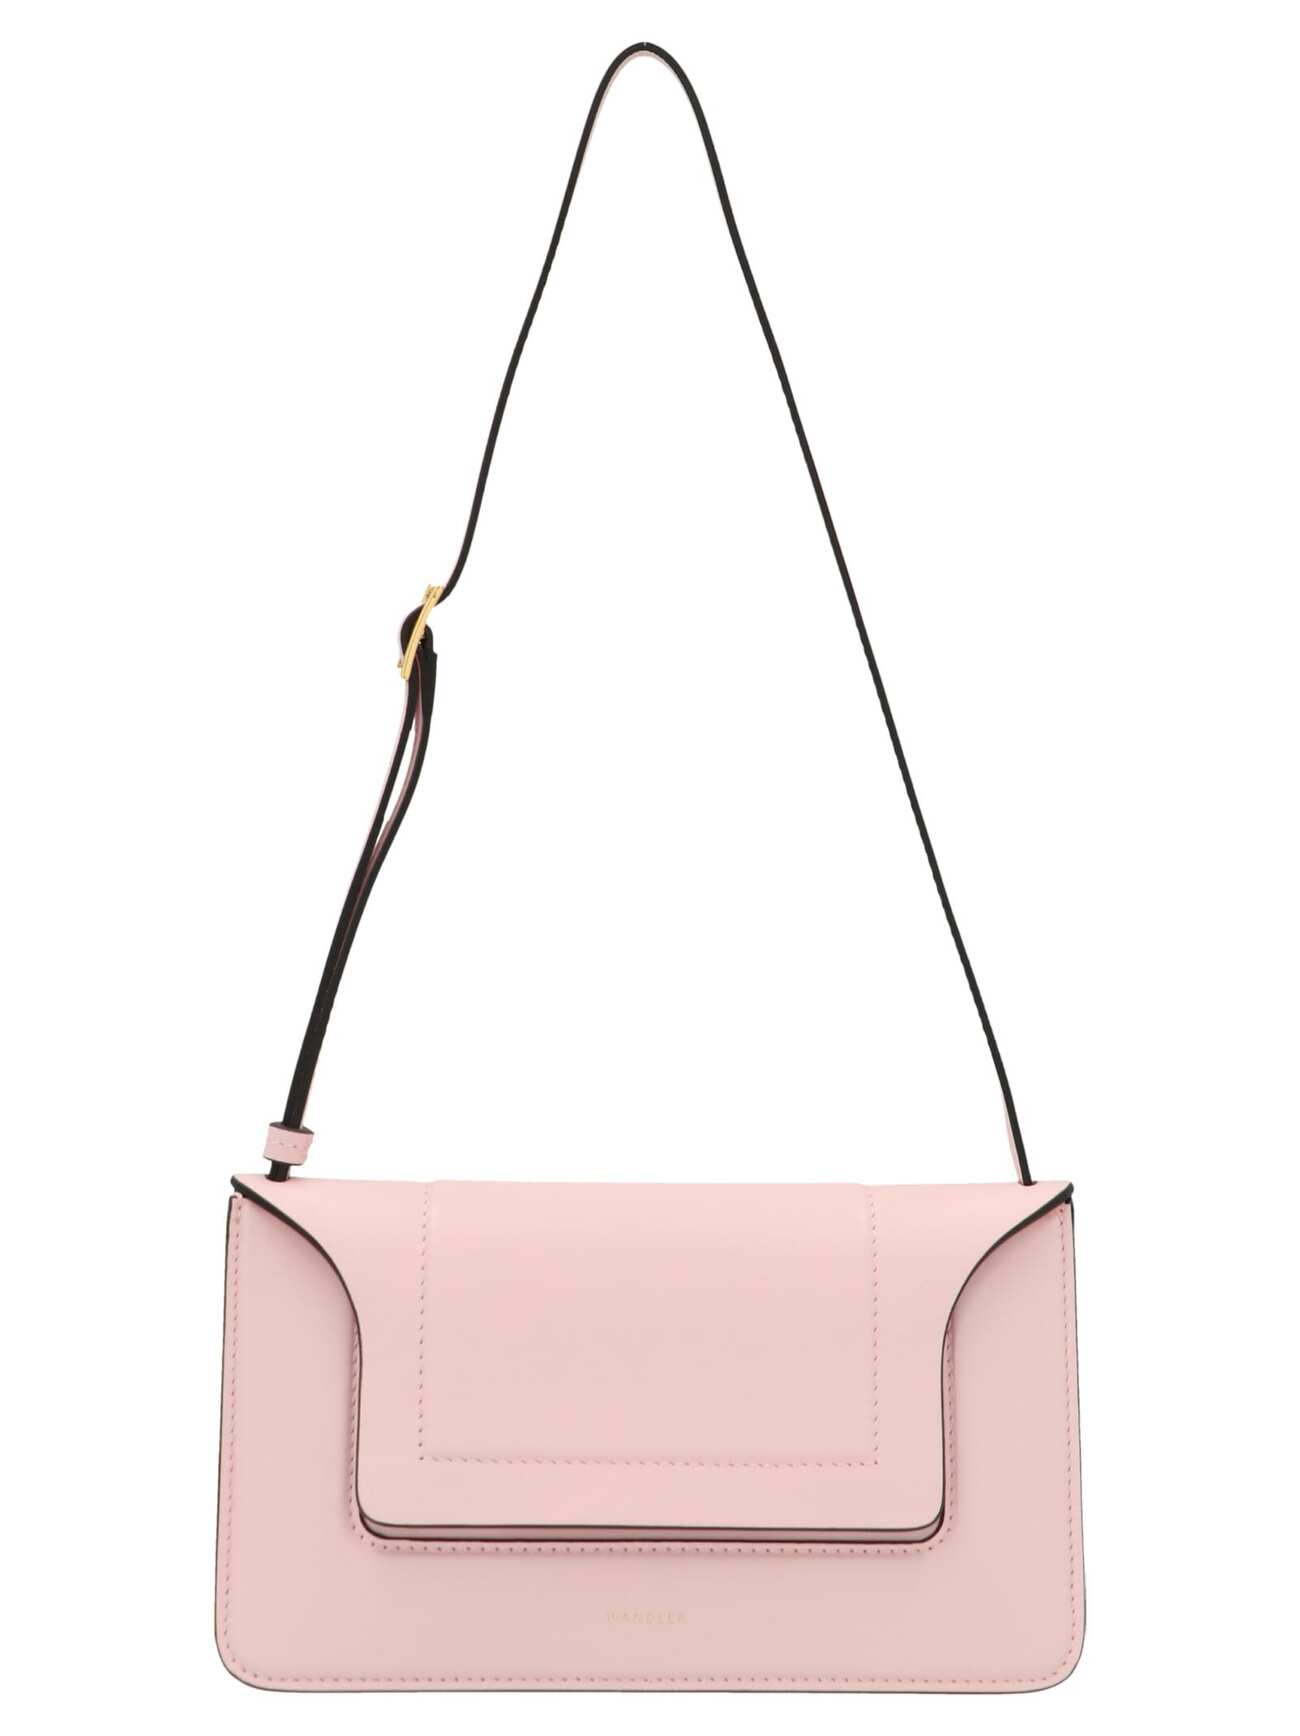 Wandler penelope Mini Shoulder Bag in pink